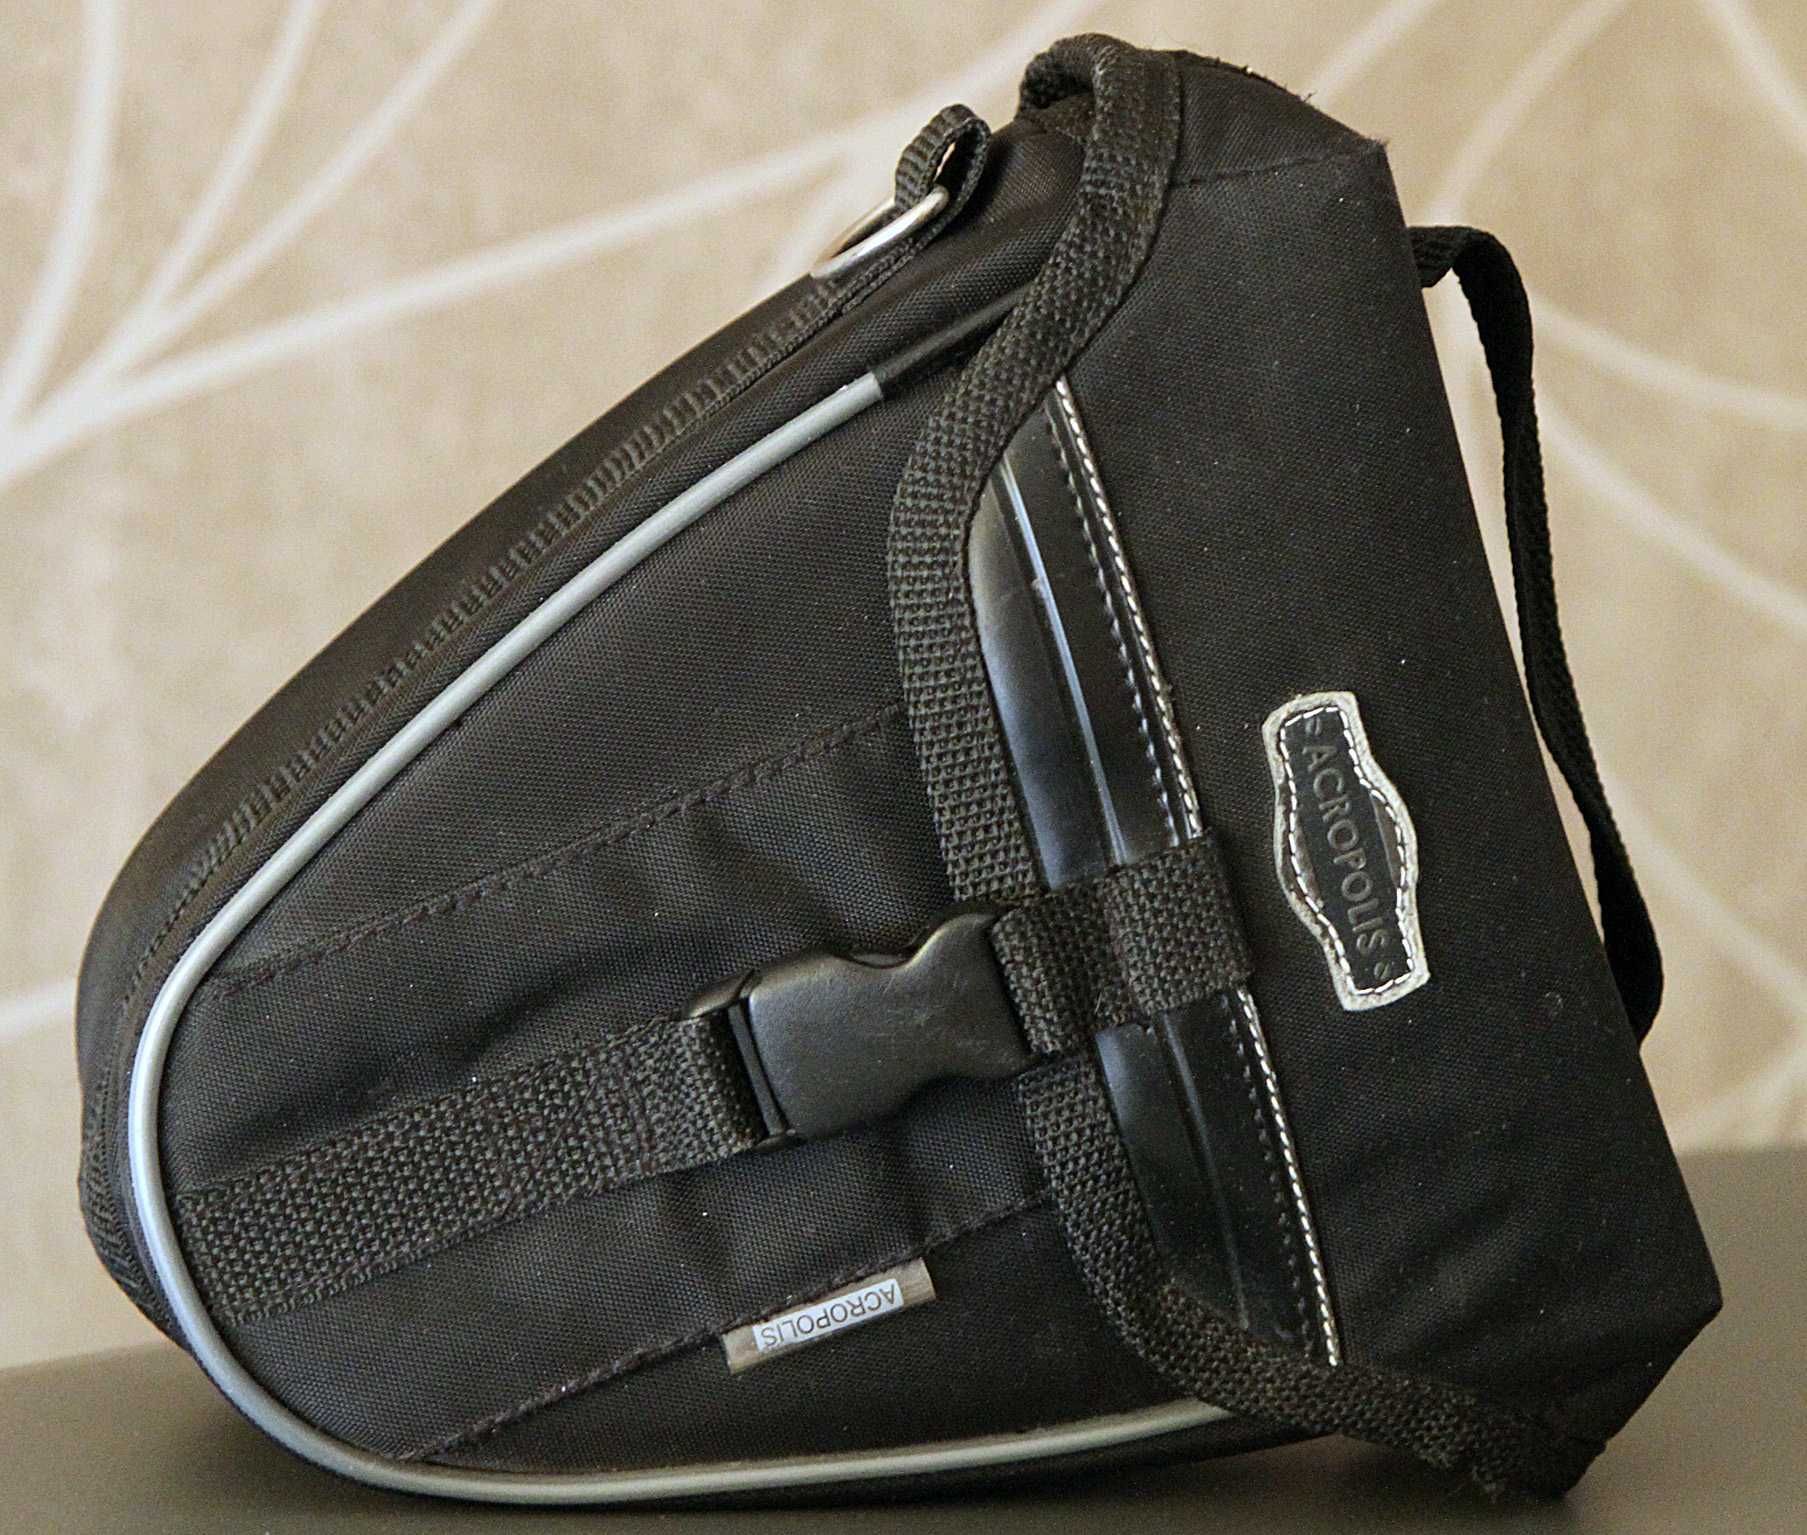 Кофер,сумка для фотоапарата Acropolis